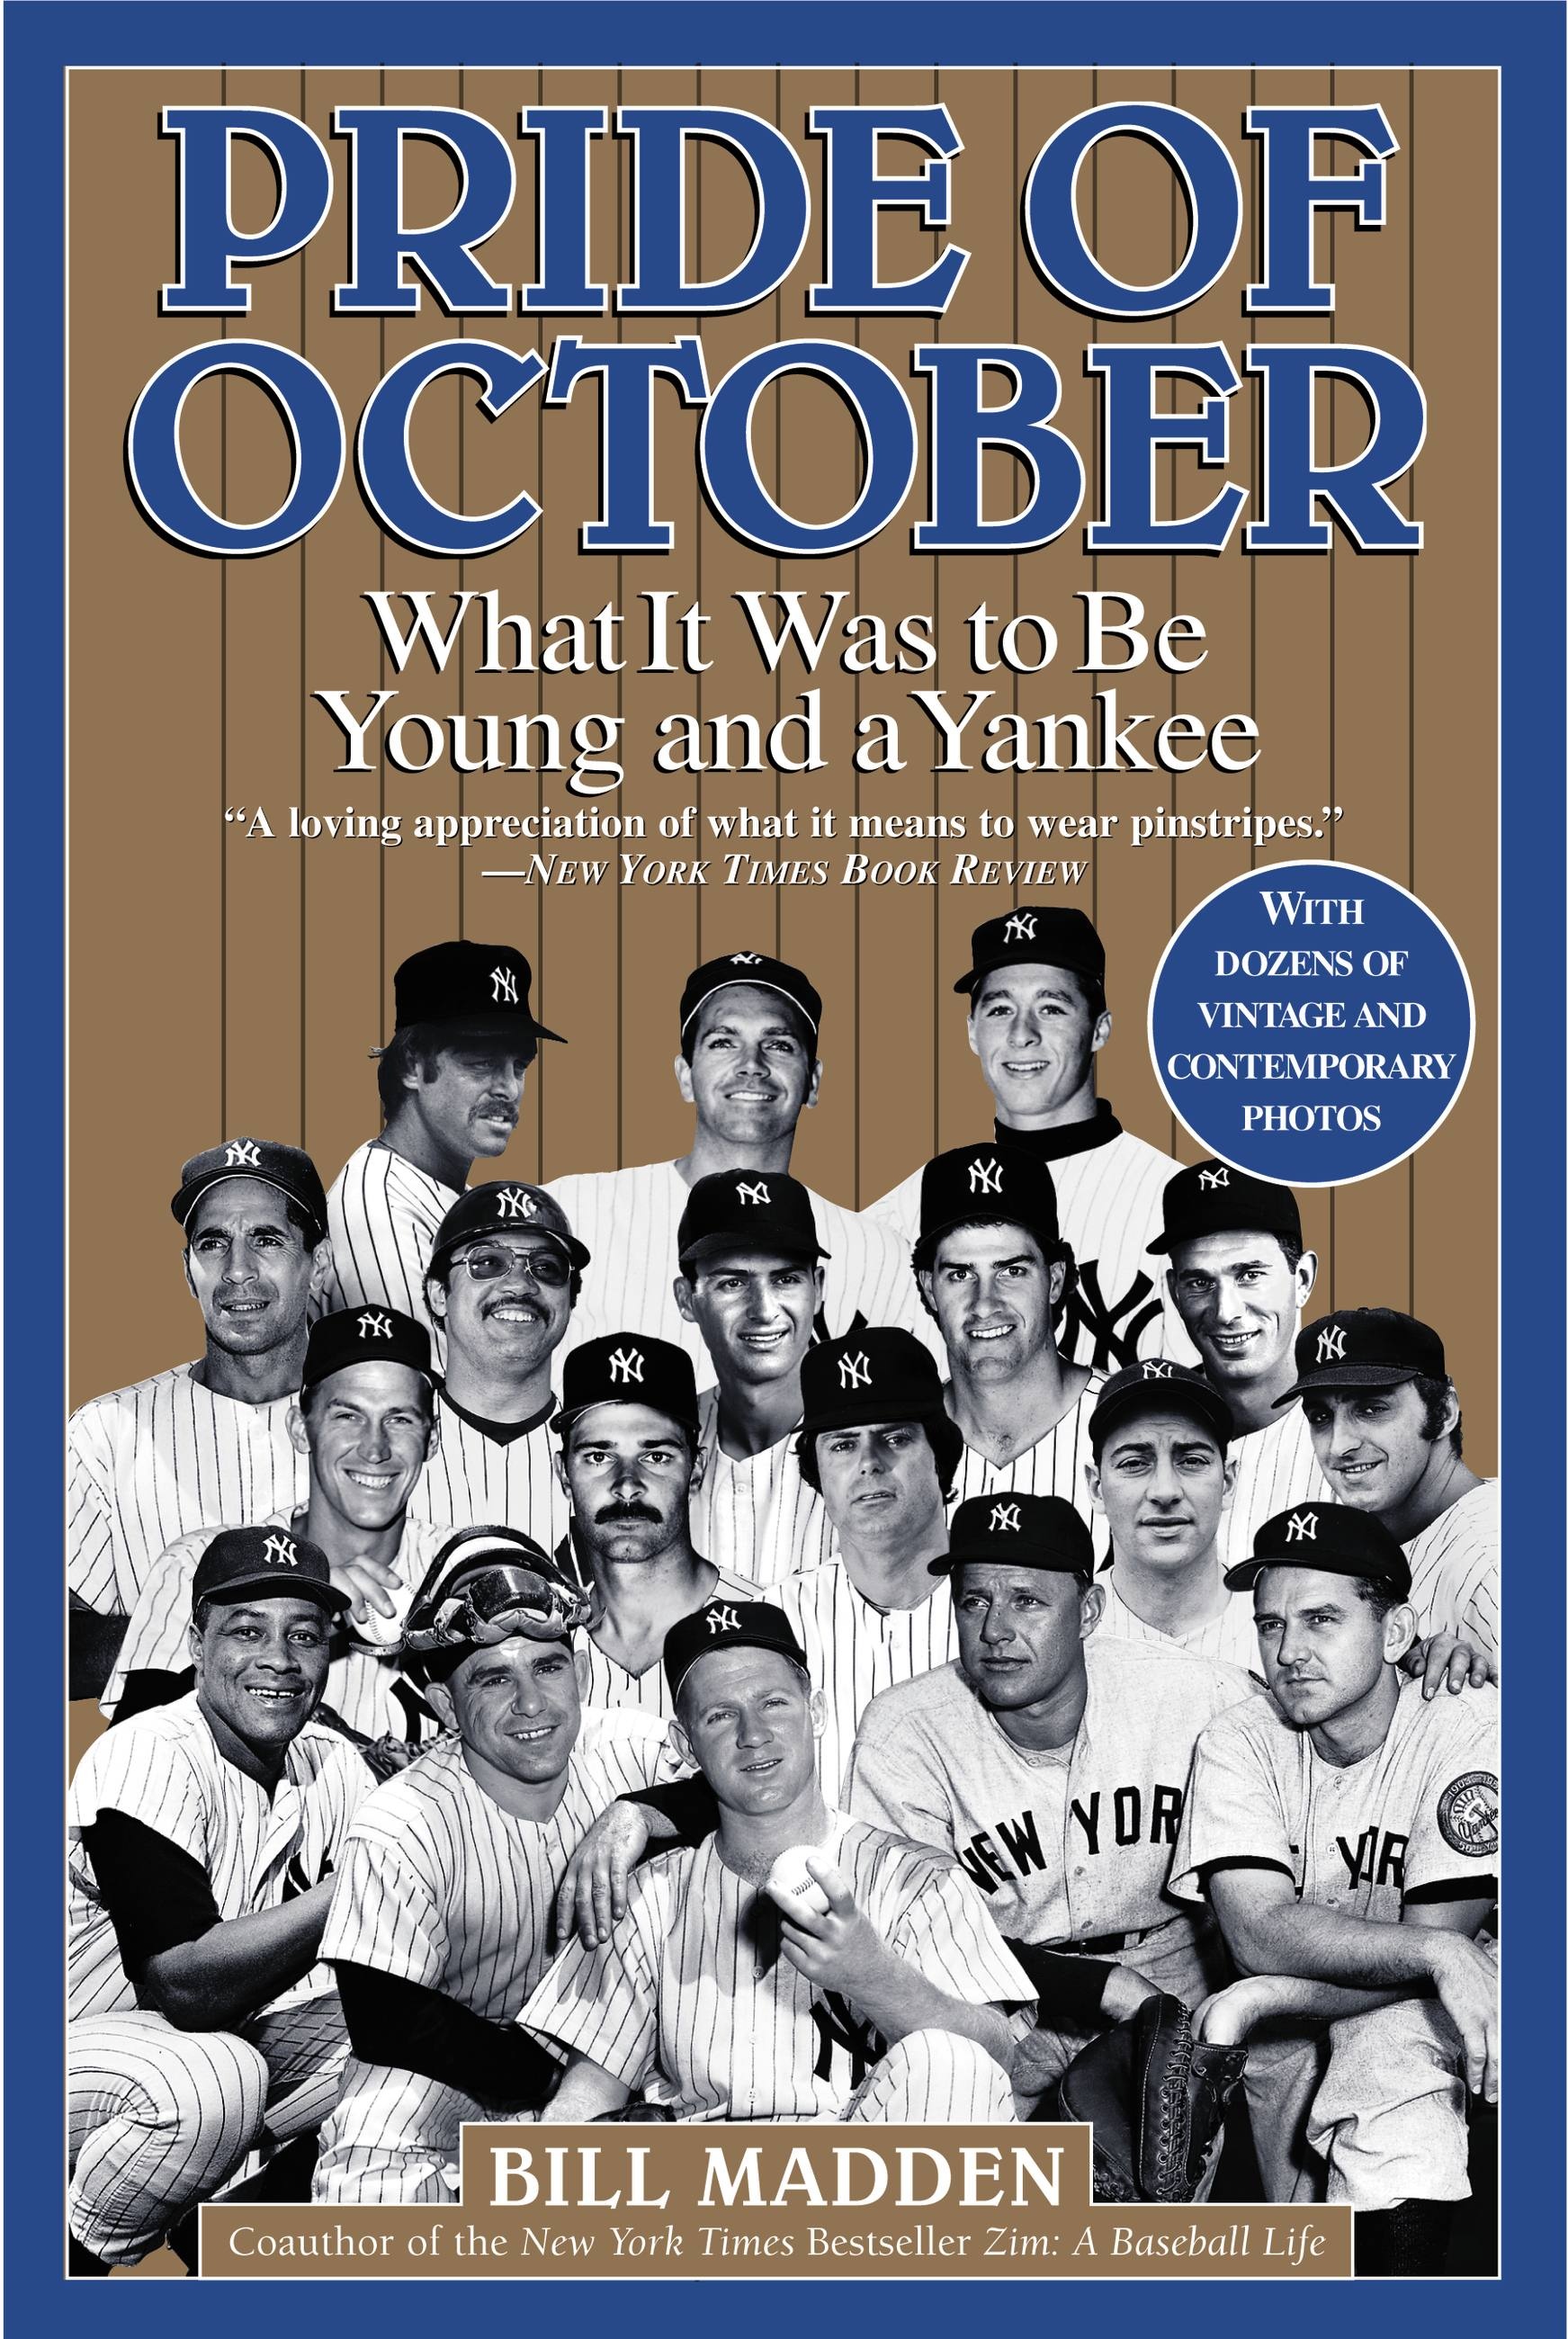 New York Yankees legends signatures city skyline baseball poster